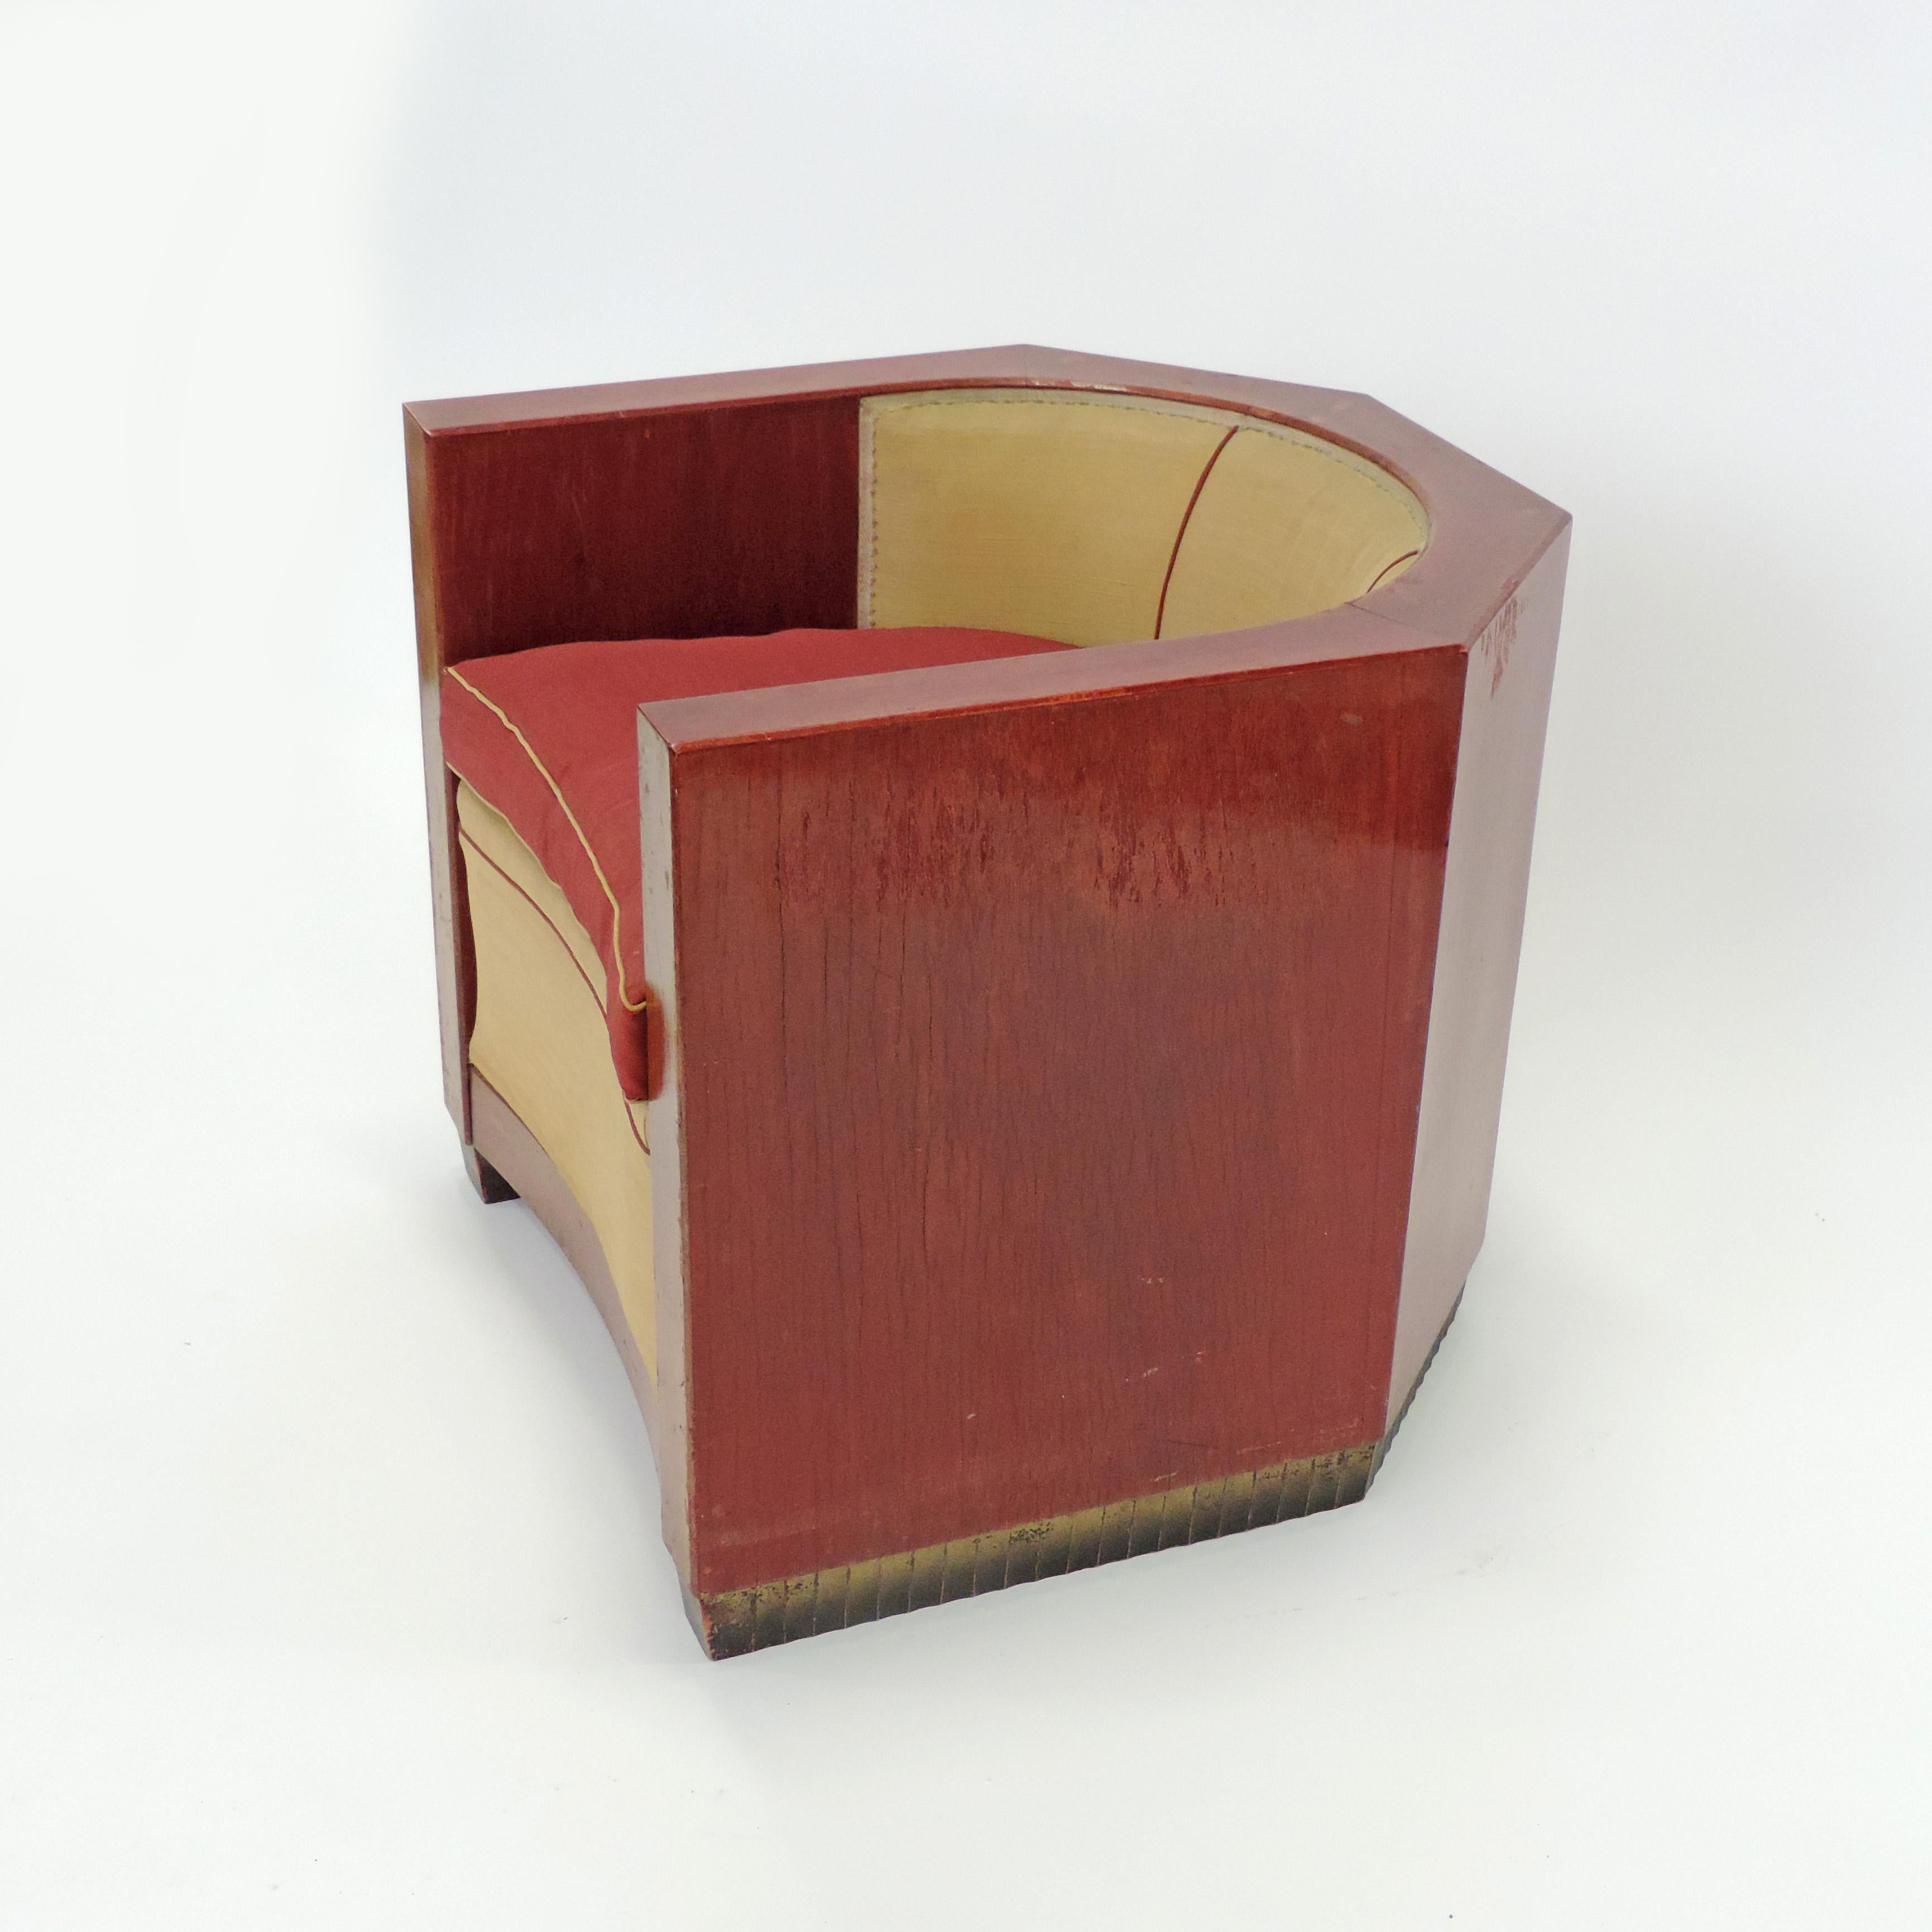 Early 20th Century Gino Maggioni Red Stained Armchair for Arredamenti Borsani Varedo, Italy, 1920s